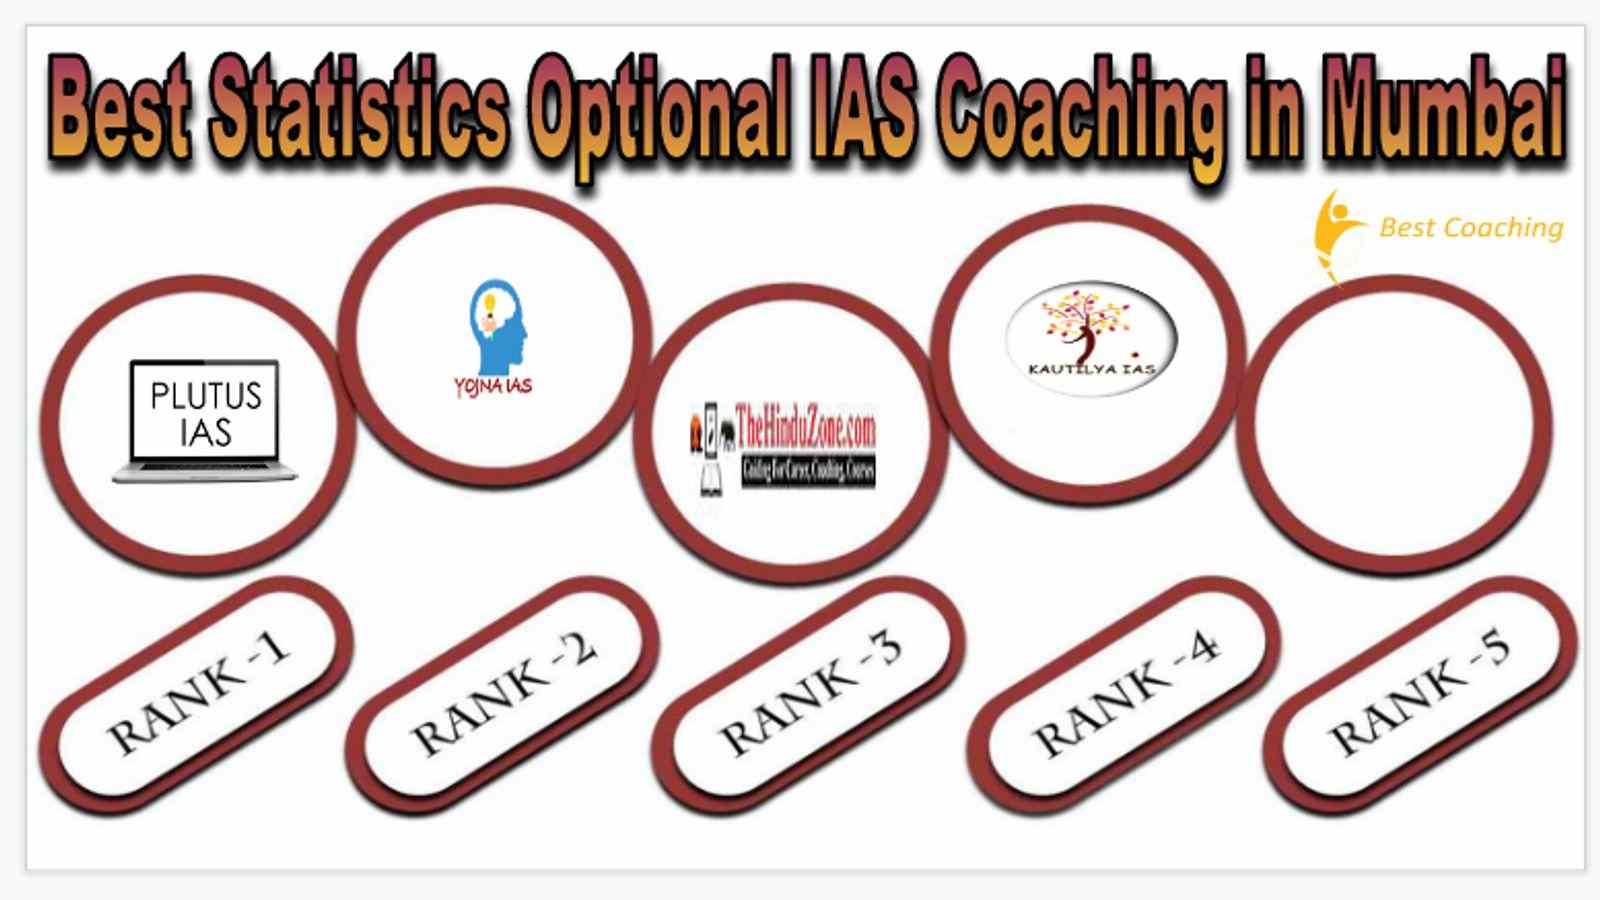 Best Statistics Optional IAS Coaching in Mumbai